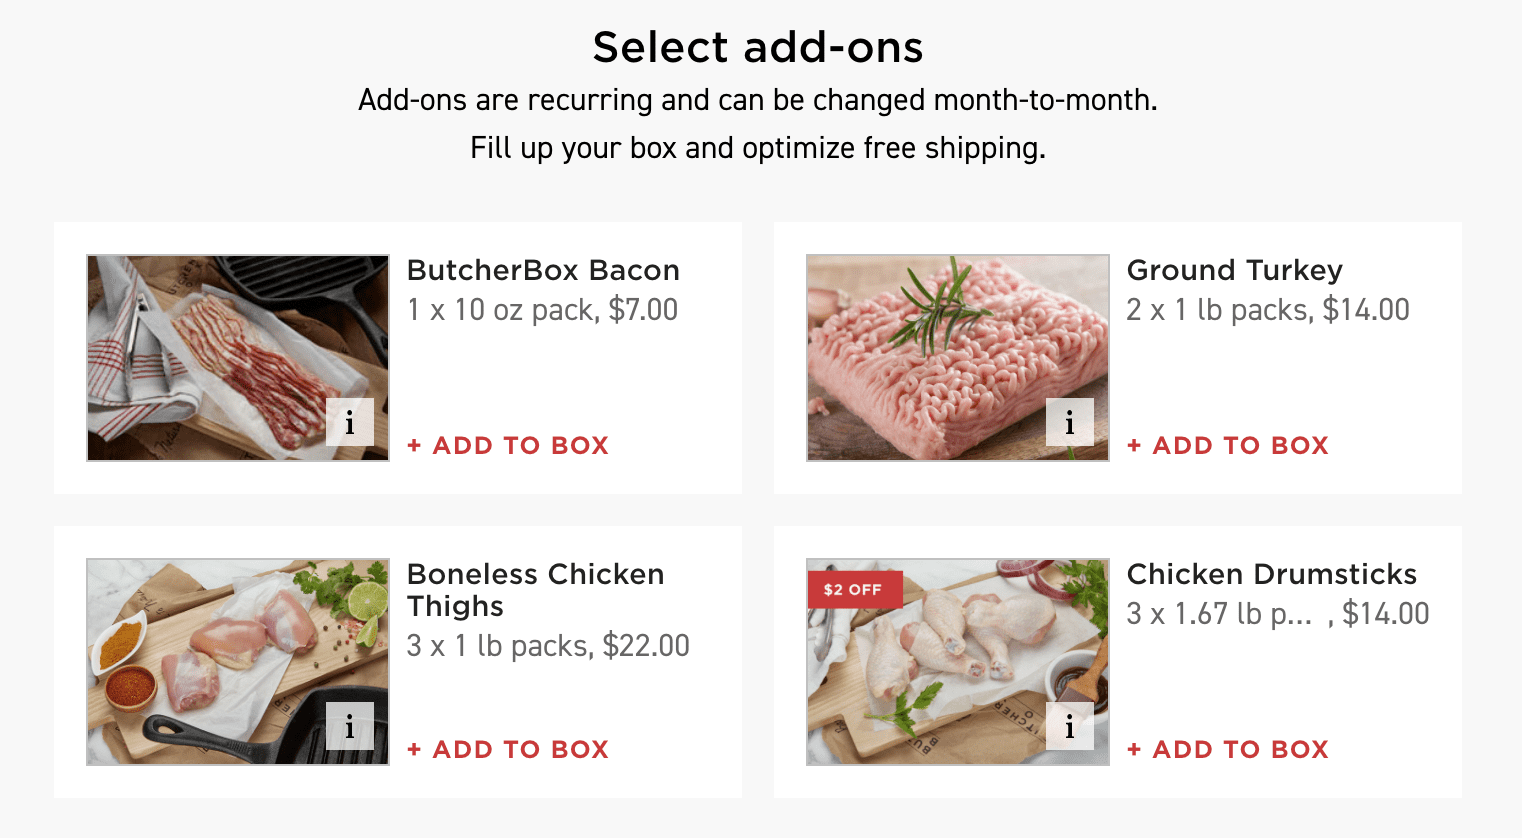 Select add-ons for Butcher Box screenshot.